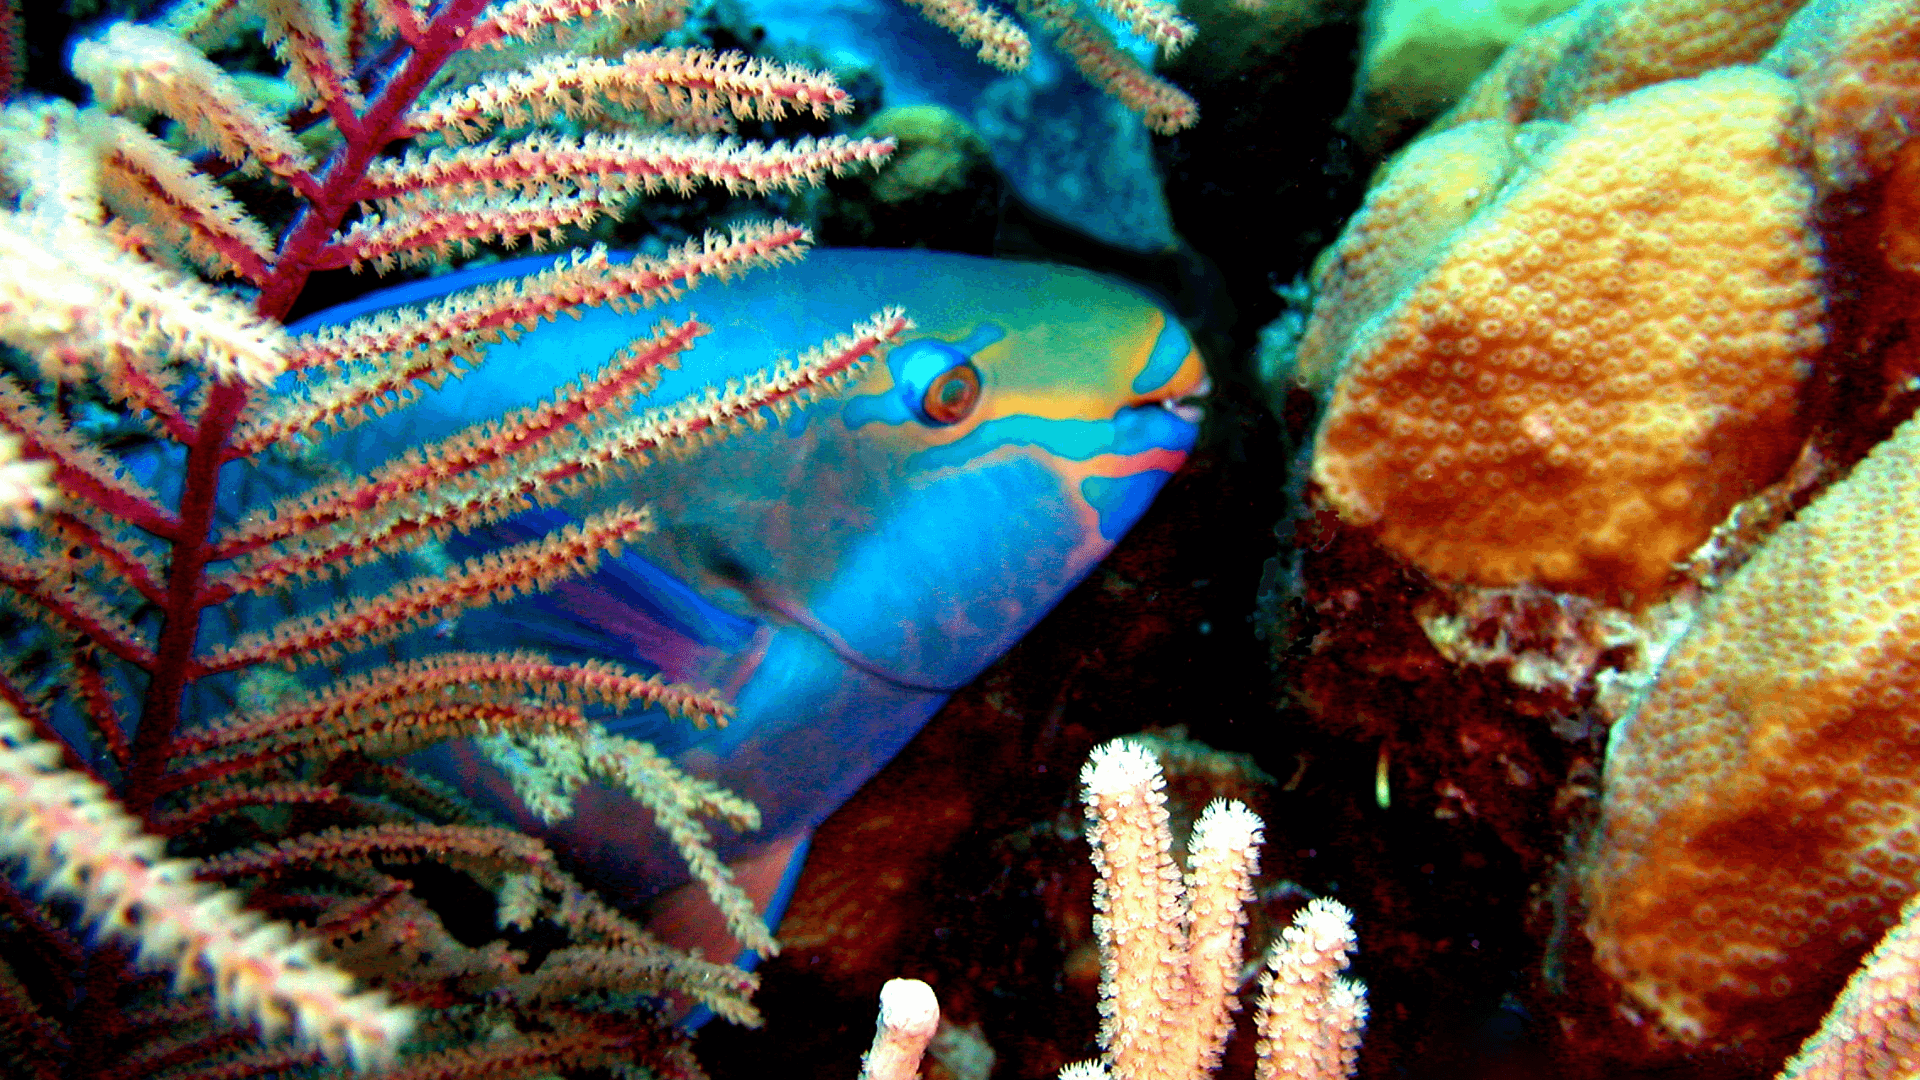 A photo of Princess parrotfish